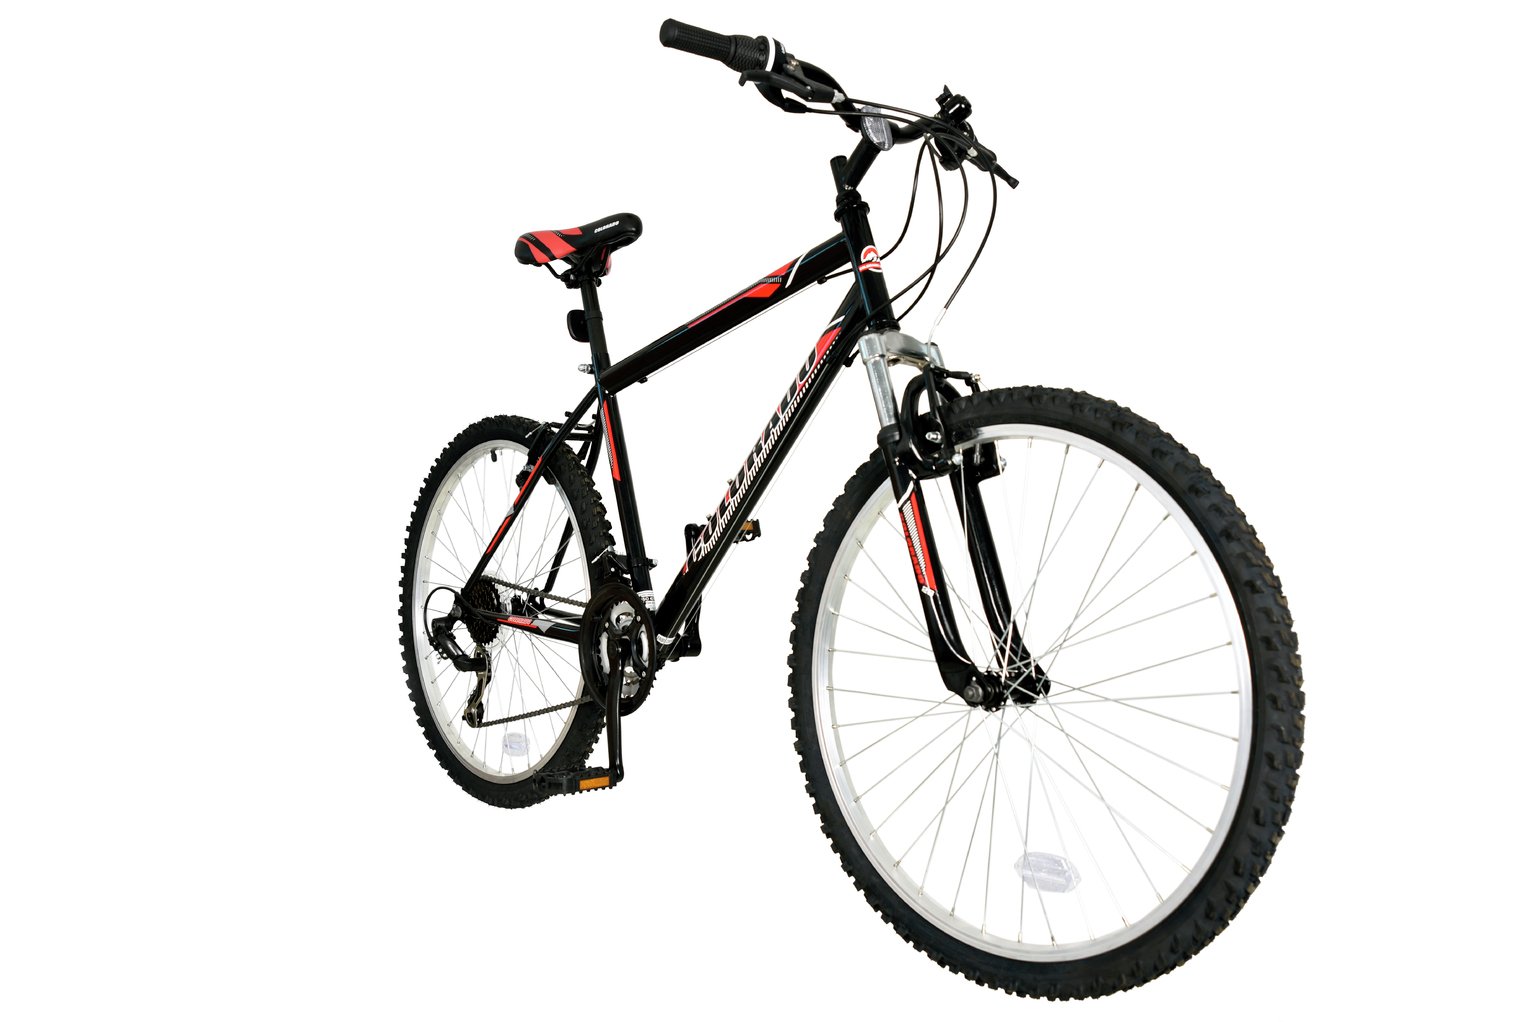 Colorado Denver 26 Inch Wheel Size Men's Mountain Bike Review